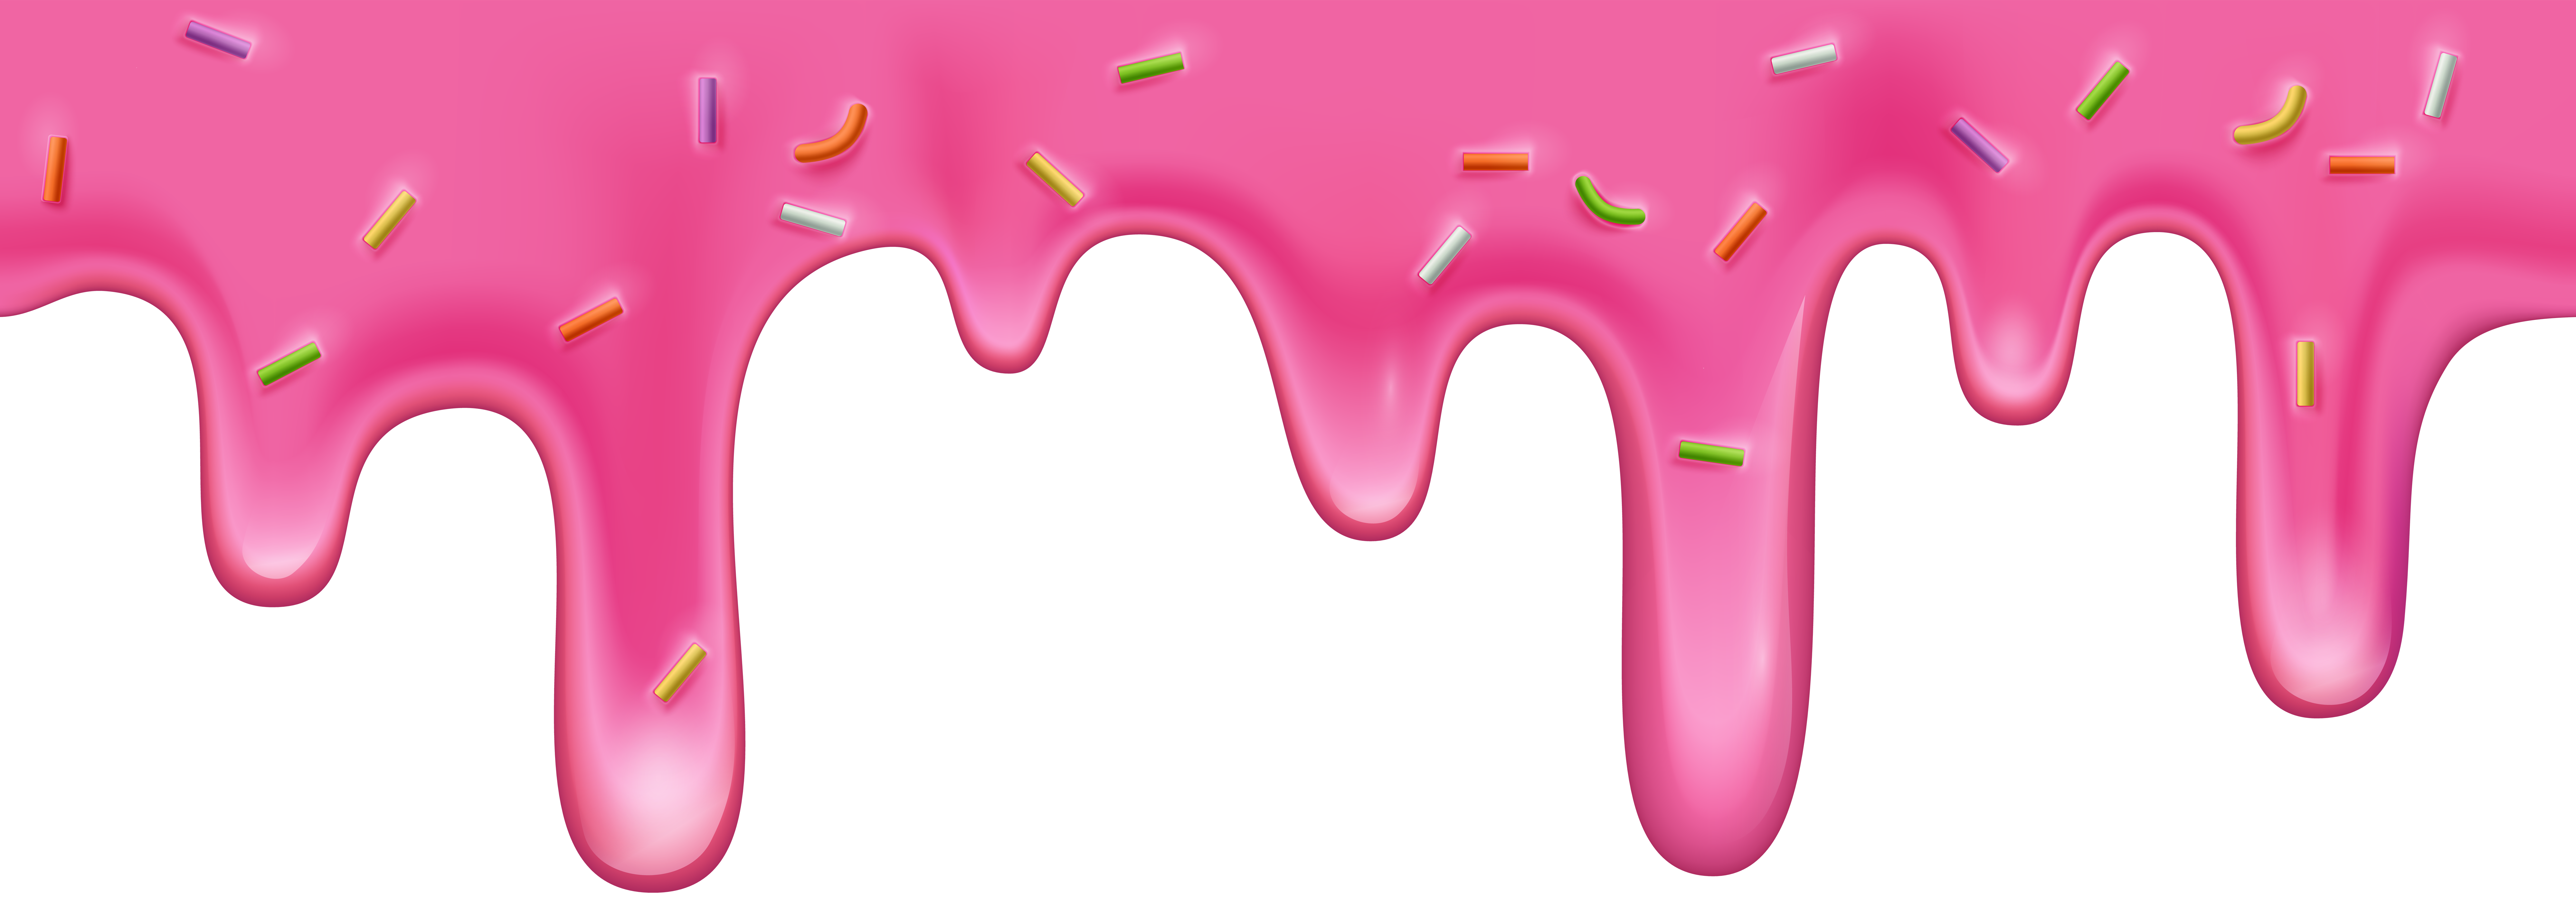 Download Pink Cream Drip Clip Art Image | Gallery Yopriceville ...